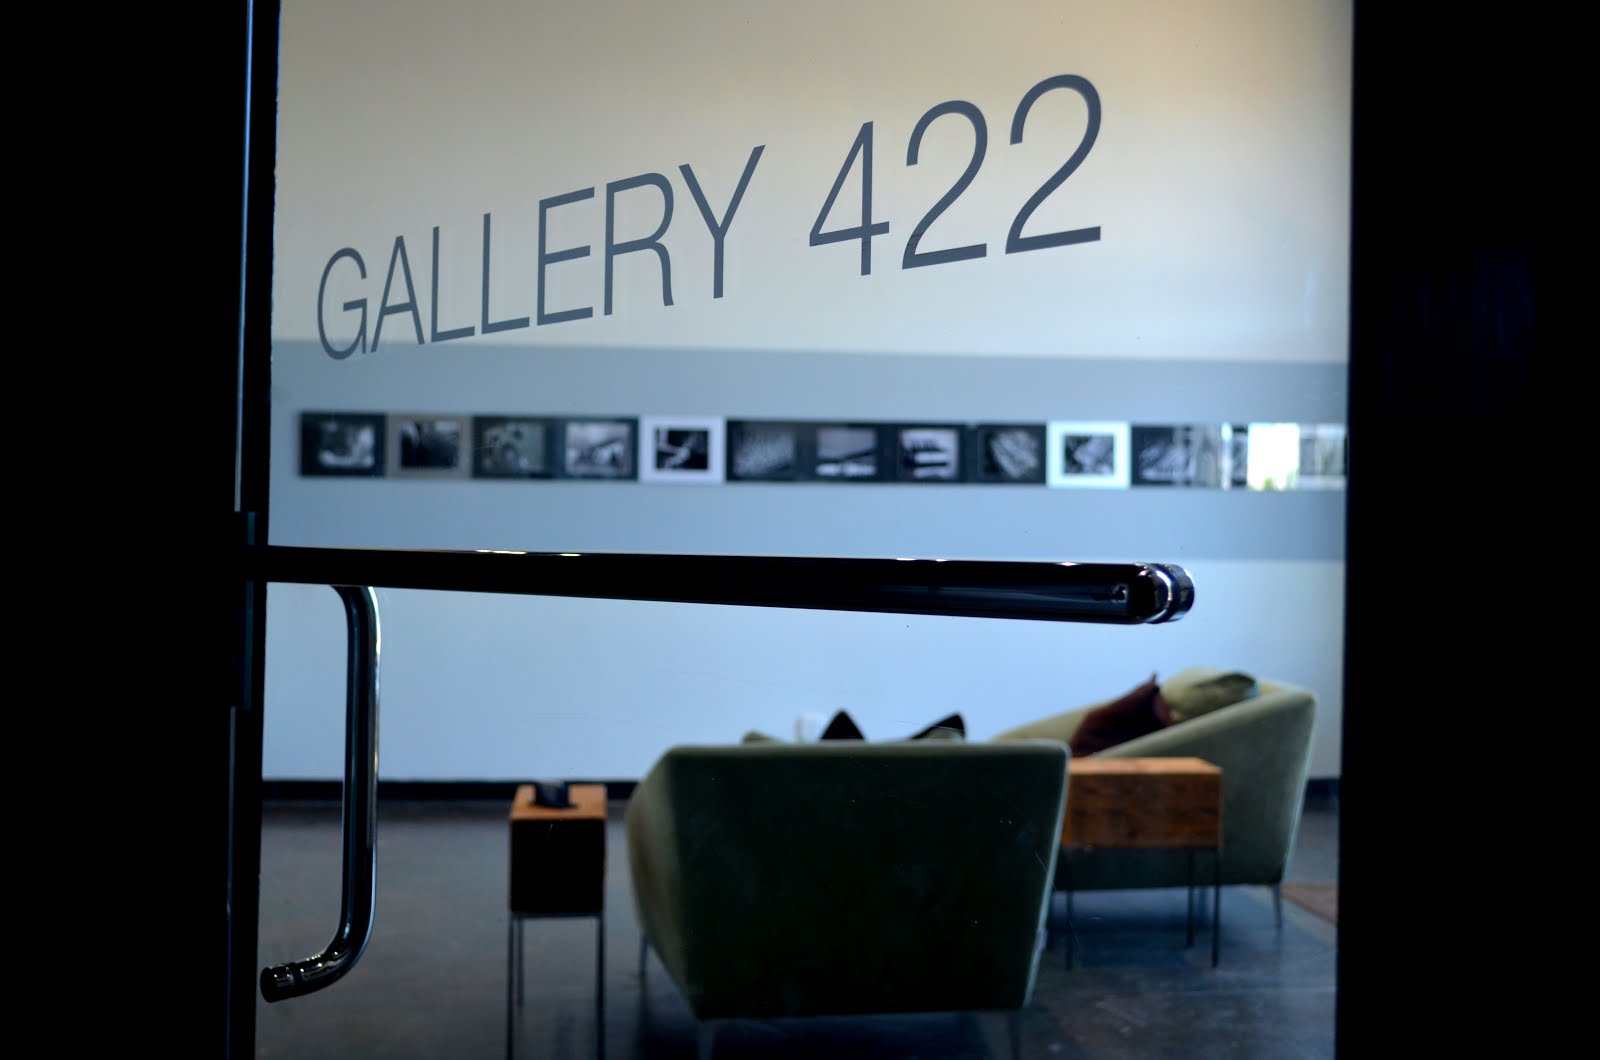 The WORKROOM/Gallery 422